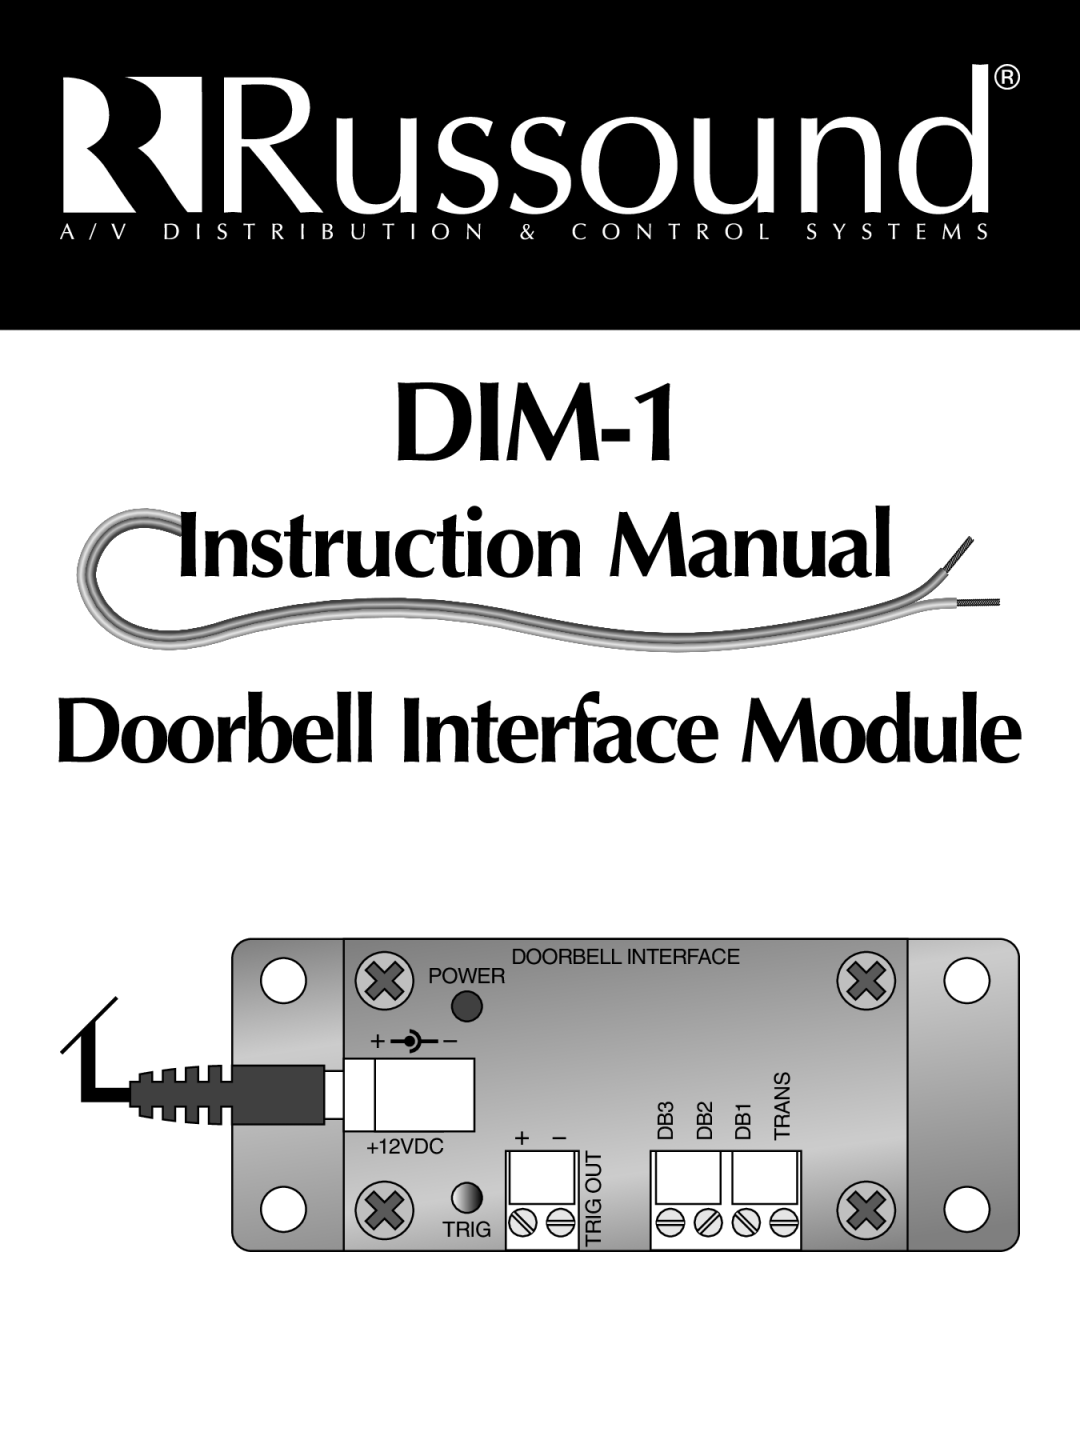 Russound DIM-1 instruction manual Doorbell Interface Module, Doorbell Interface Power, +12VDC TRIG, Trans, Trig Out 